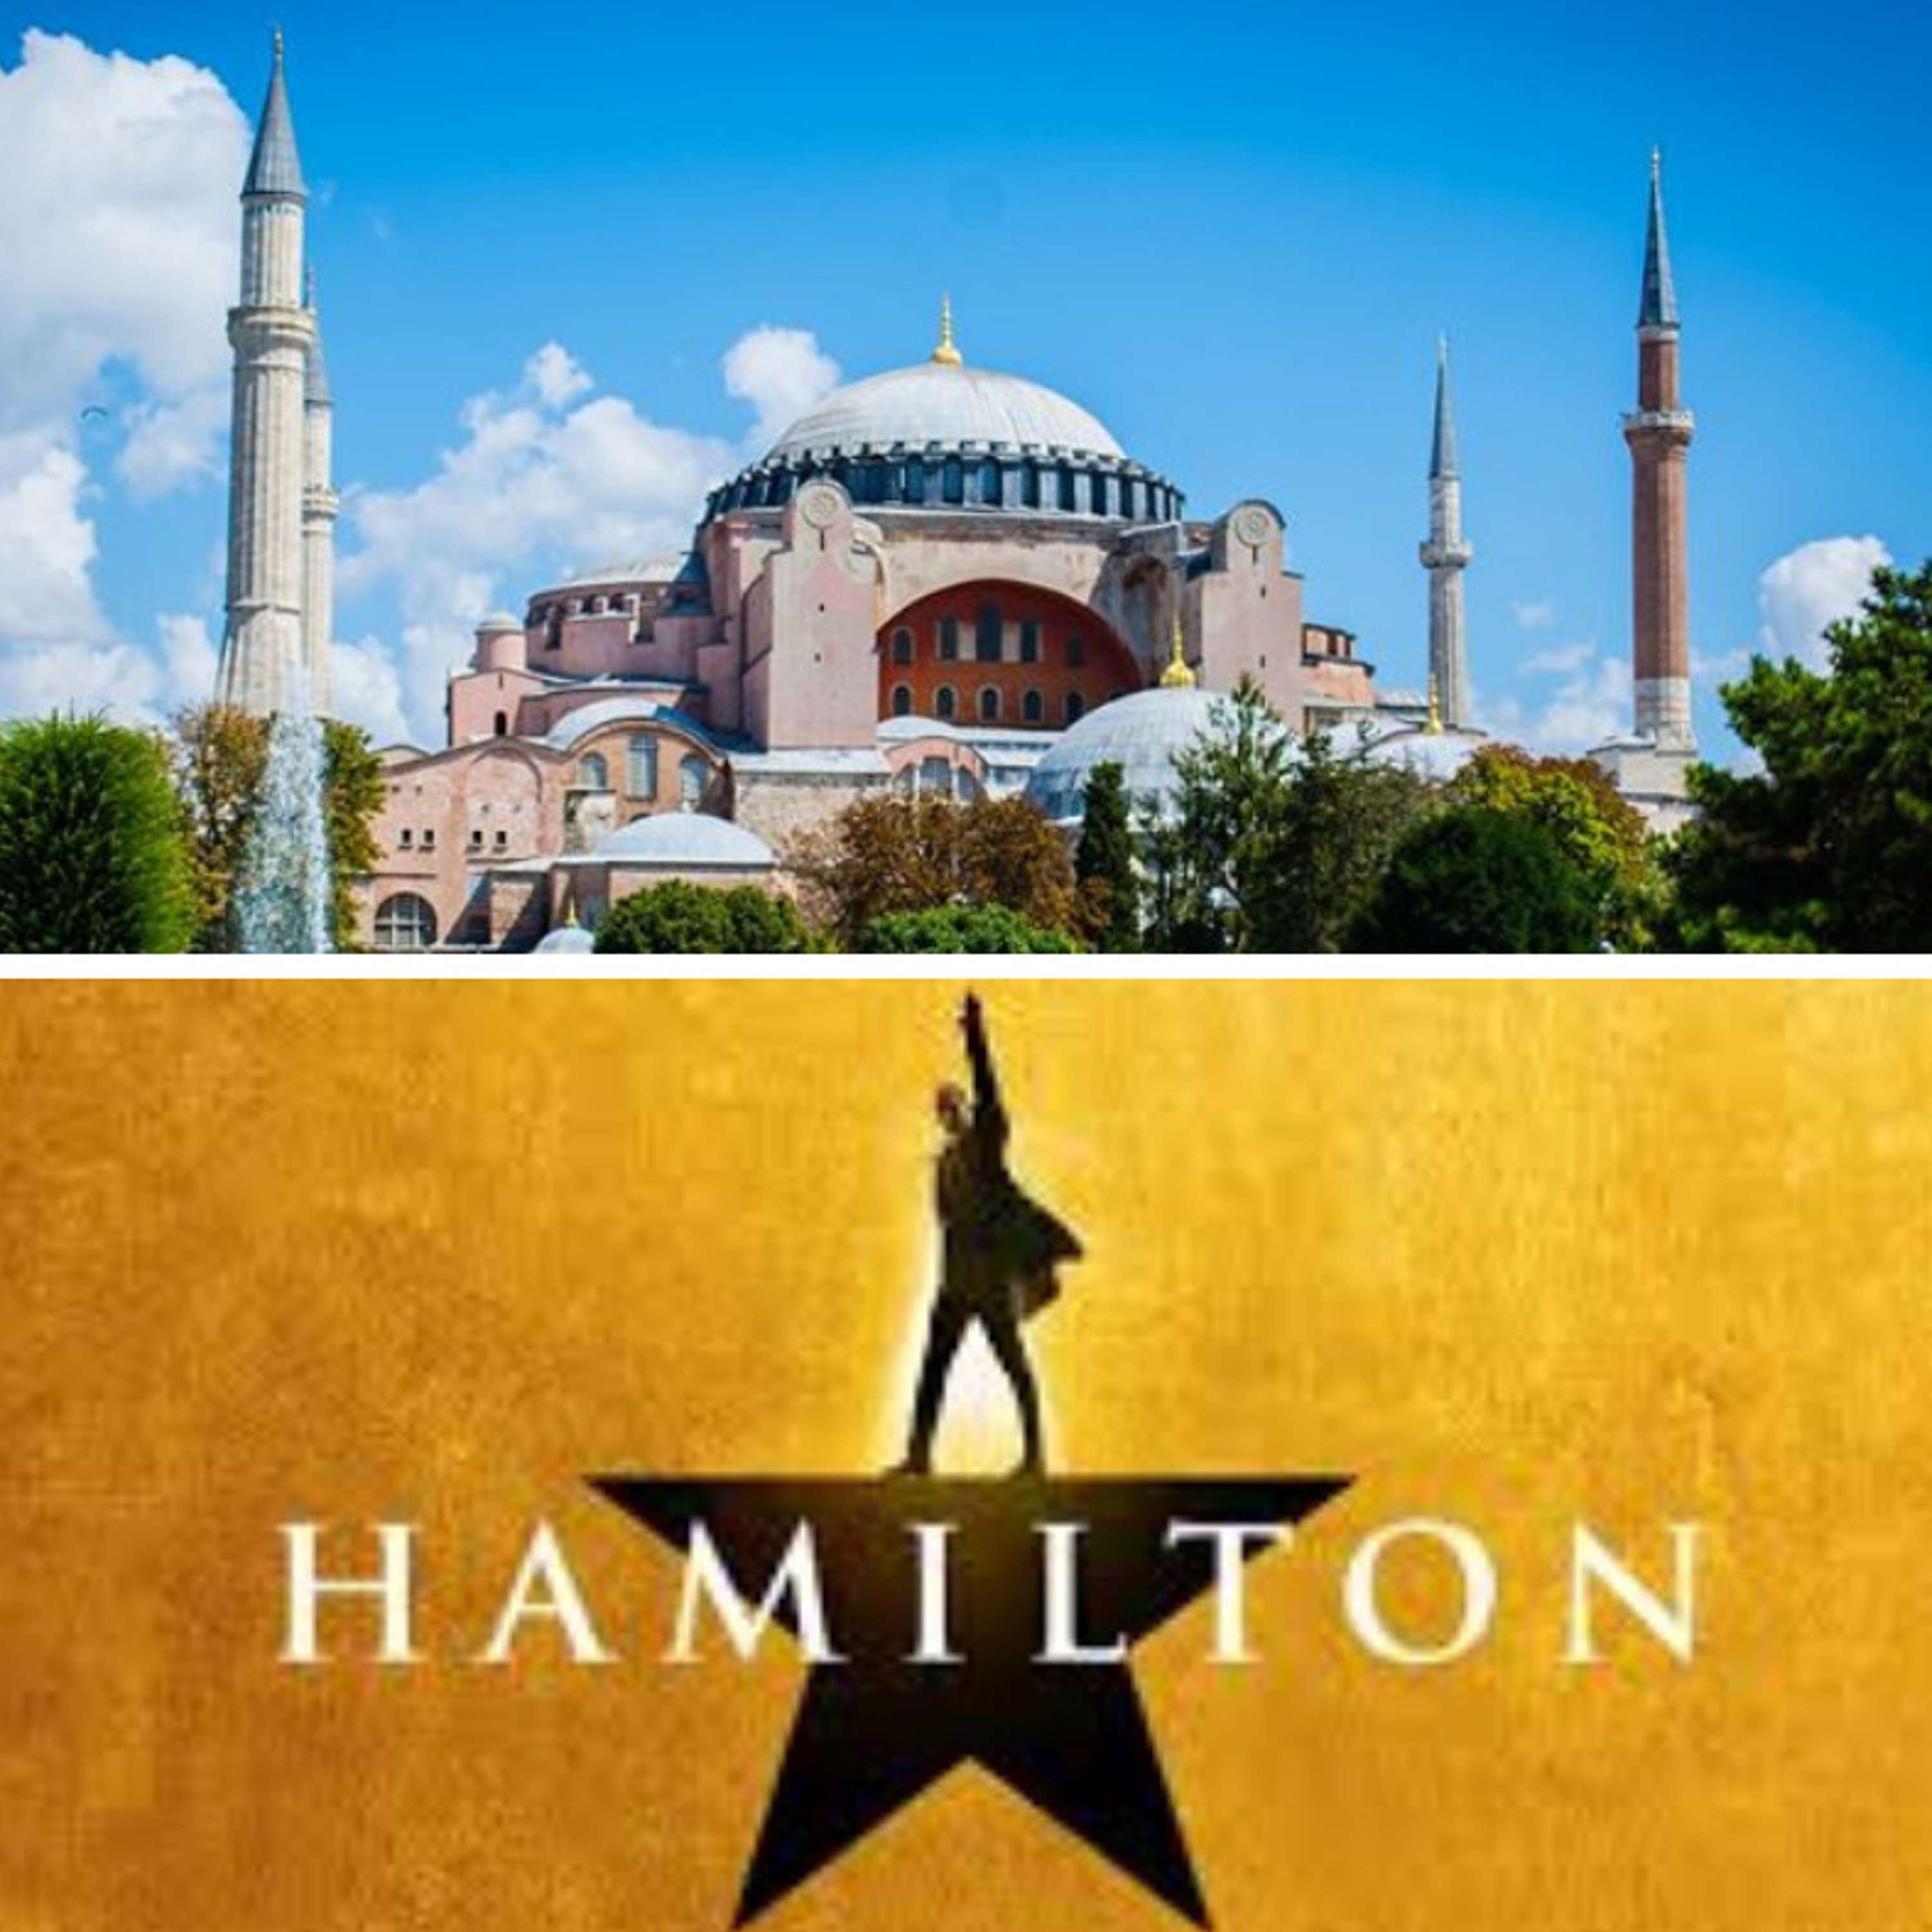 Hamilton, the Temple, and Hagia Sophia